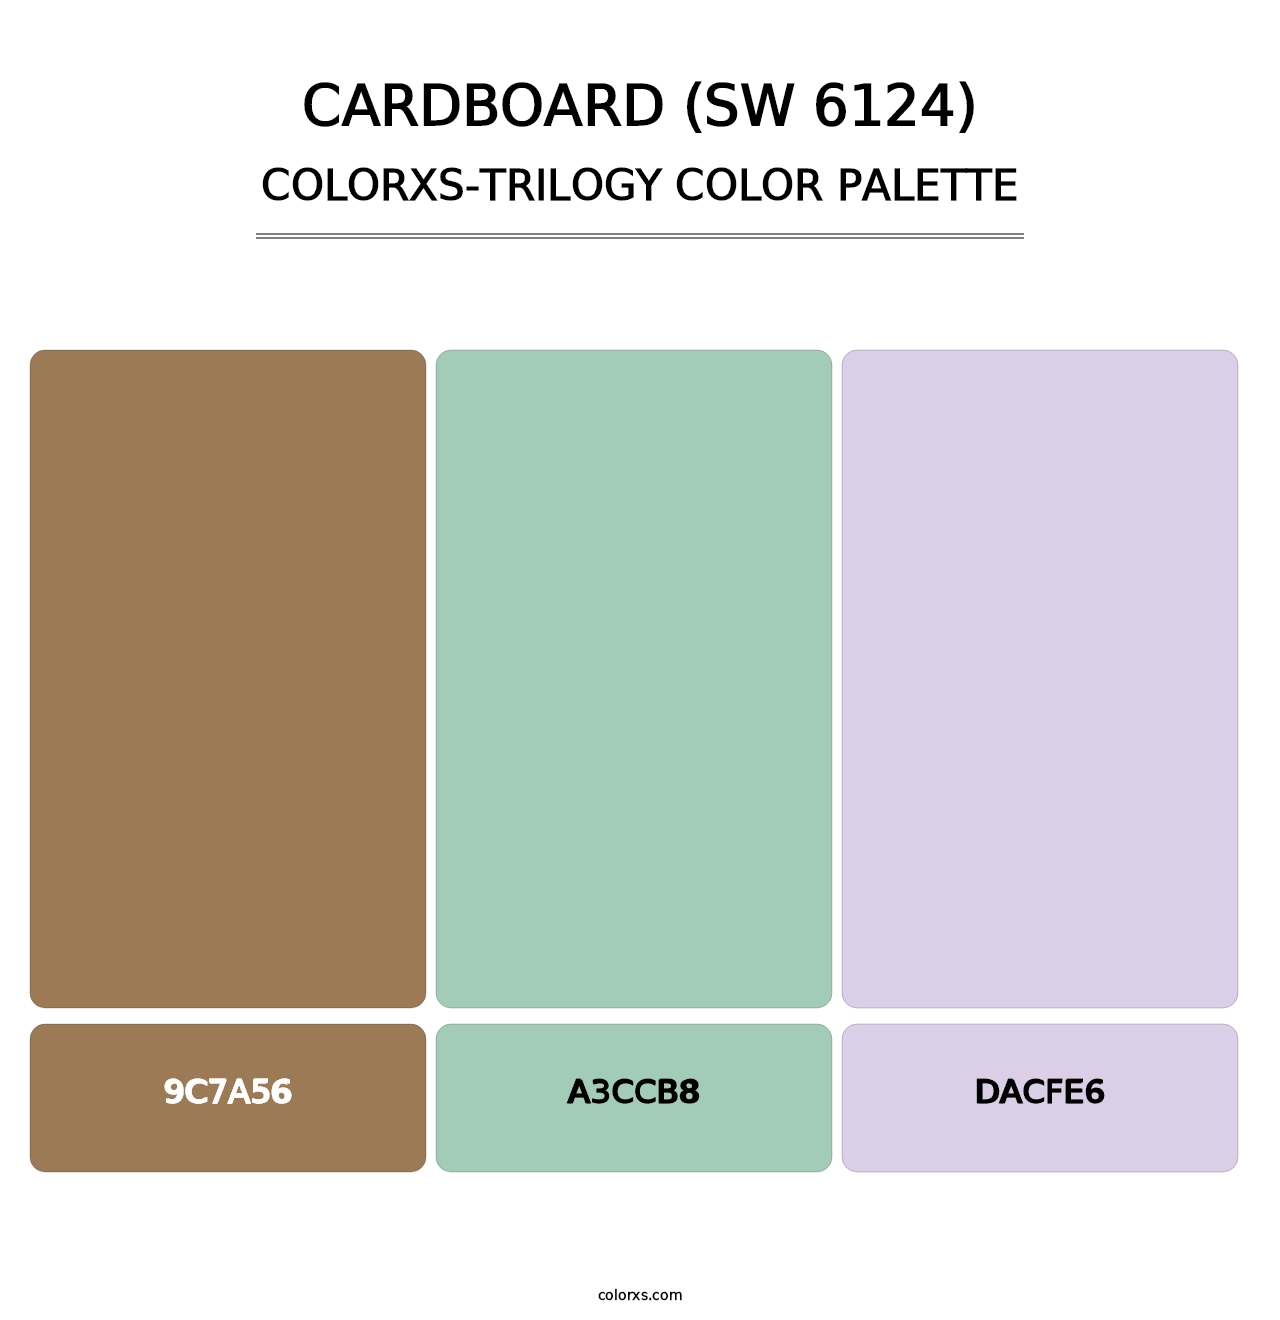 Cardboard (SW 6124) - Colorxs Trilogy Palette